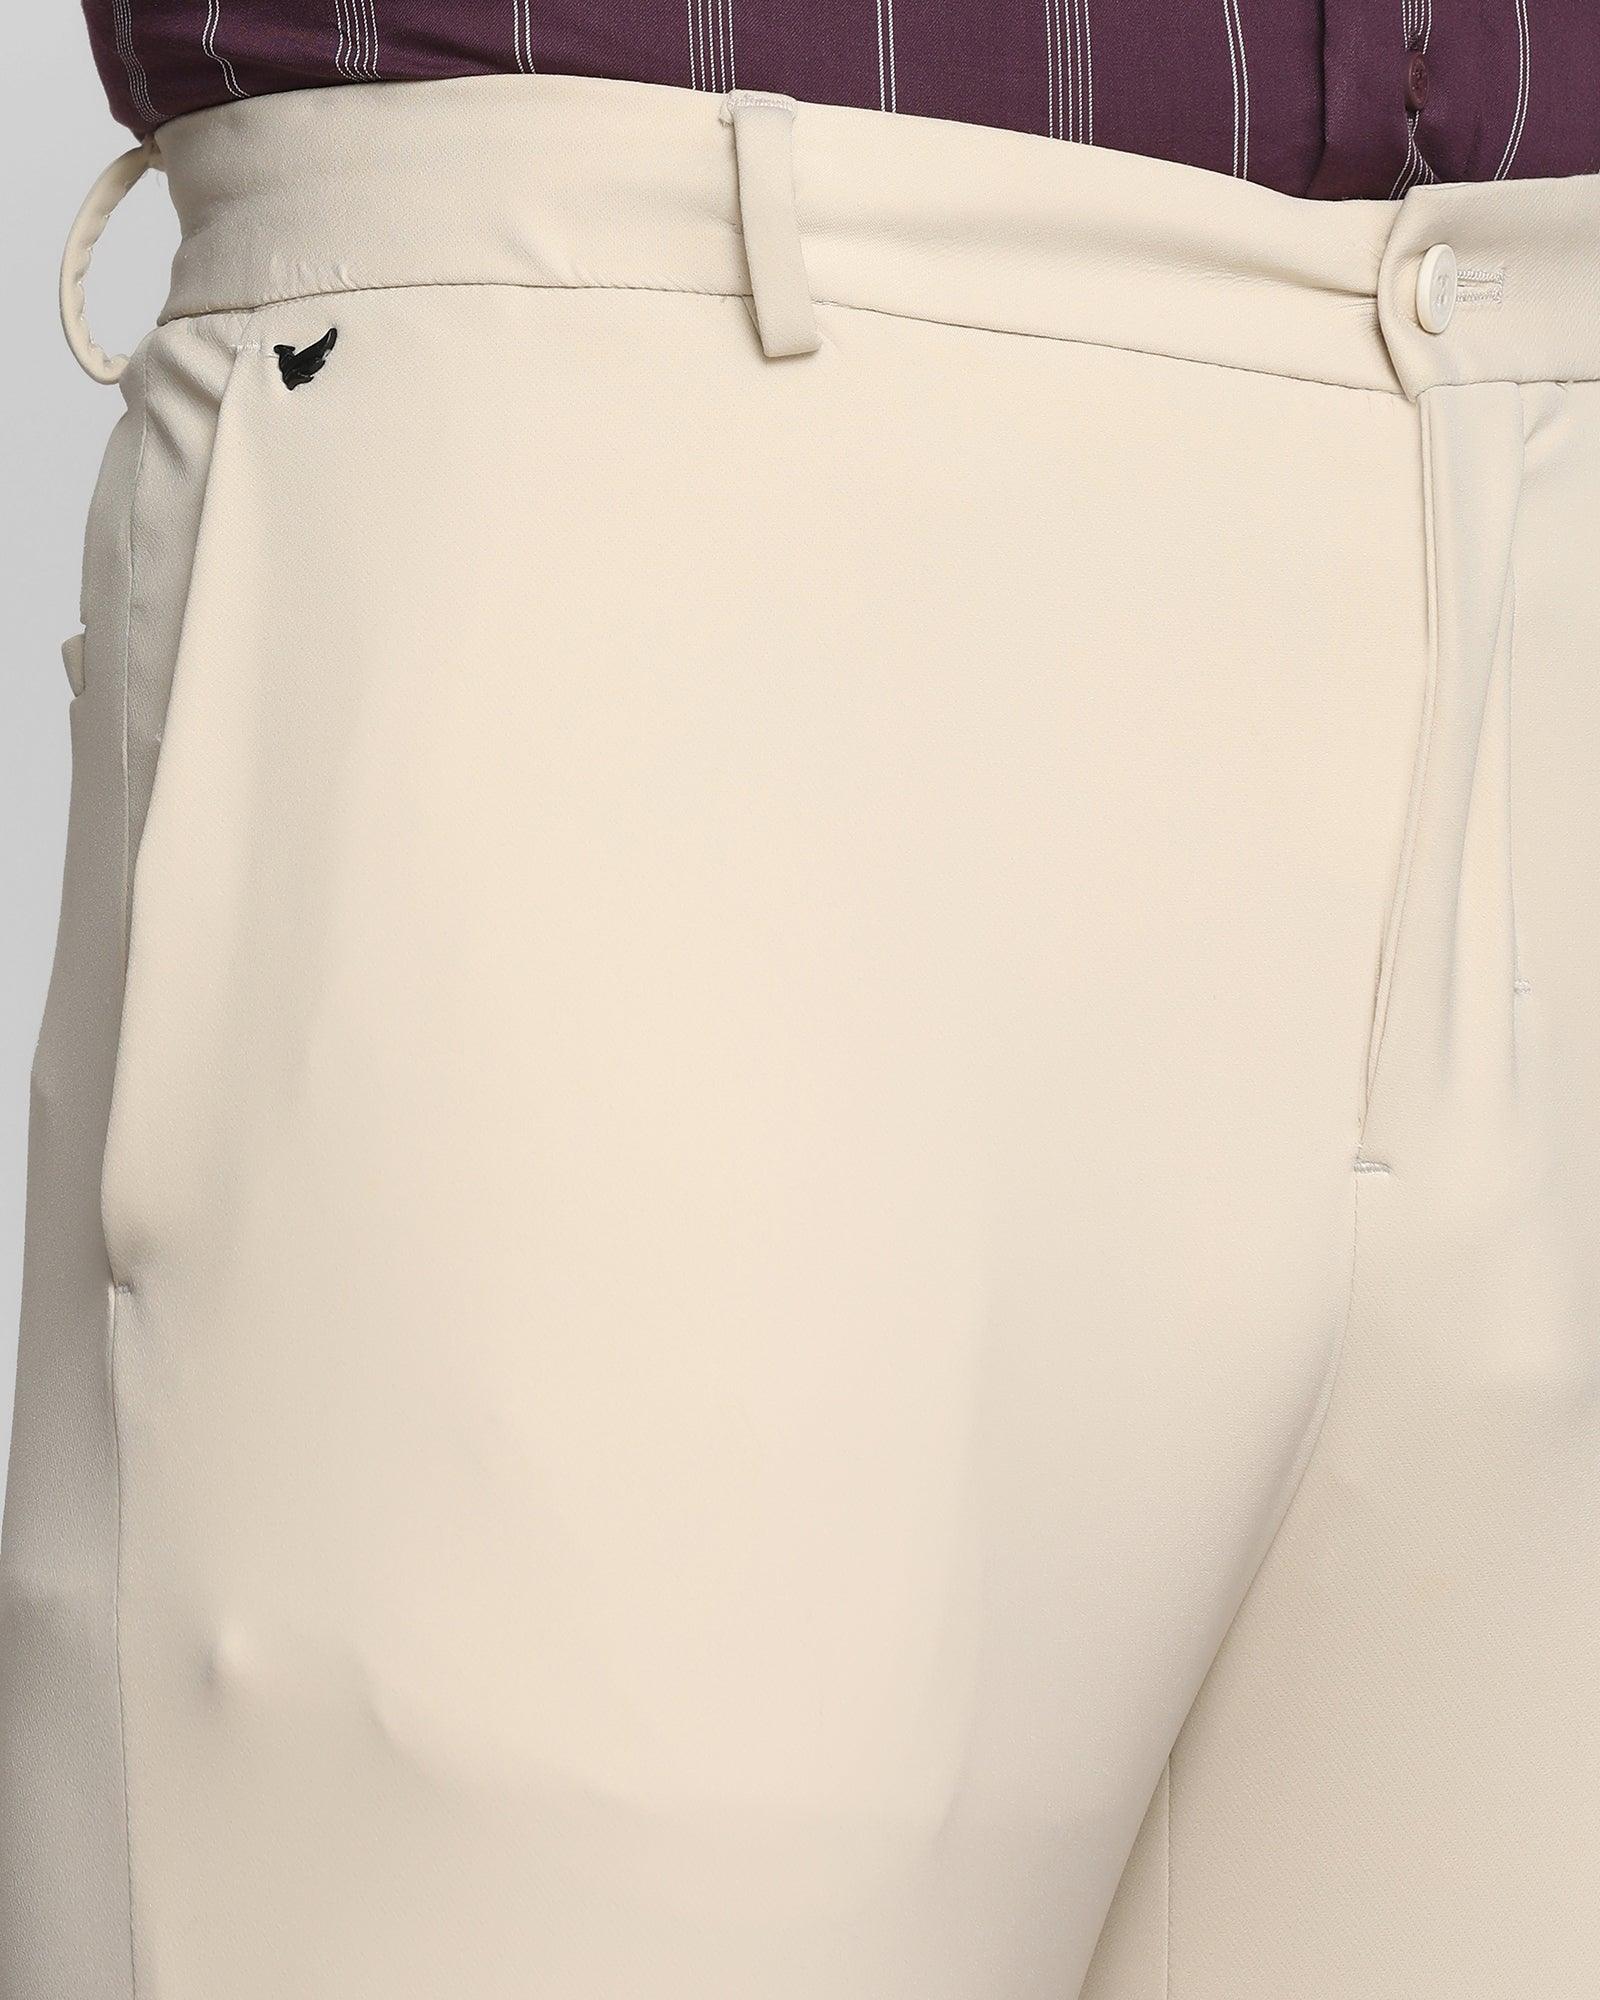 TechPro Slim Fit B-91 Formal Beige Solid Trouser - Ashley